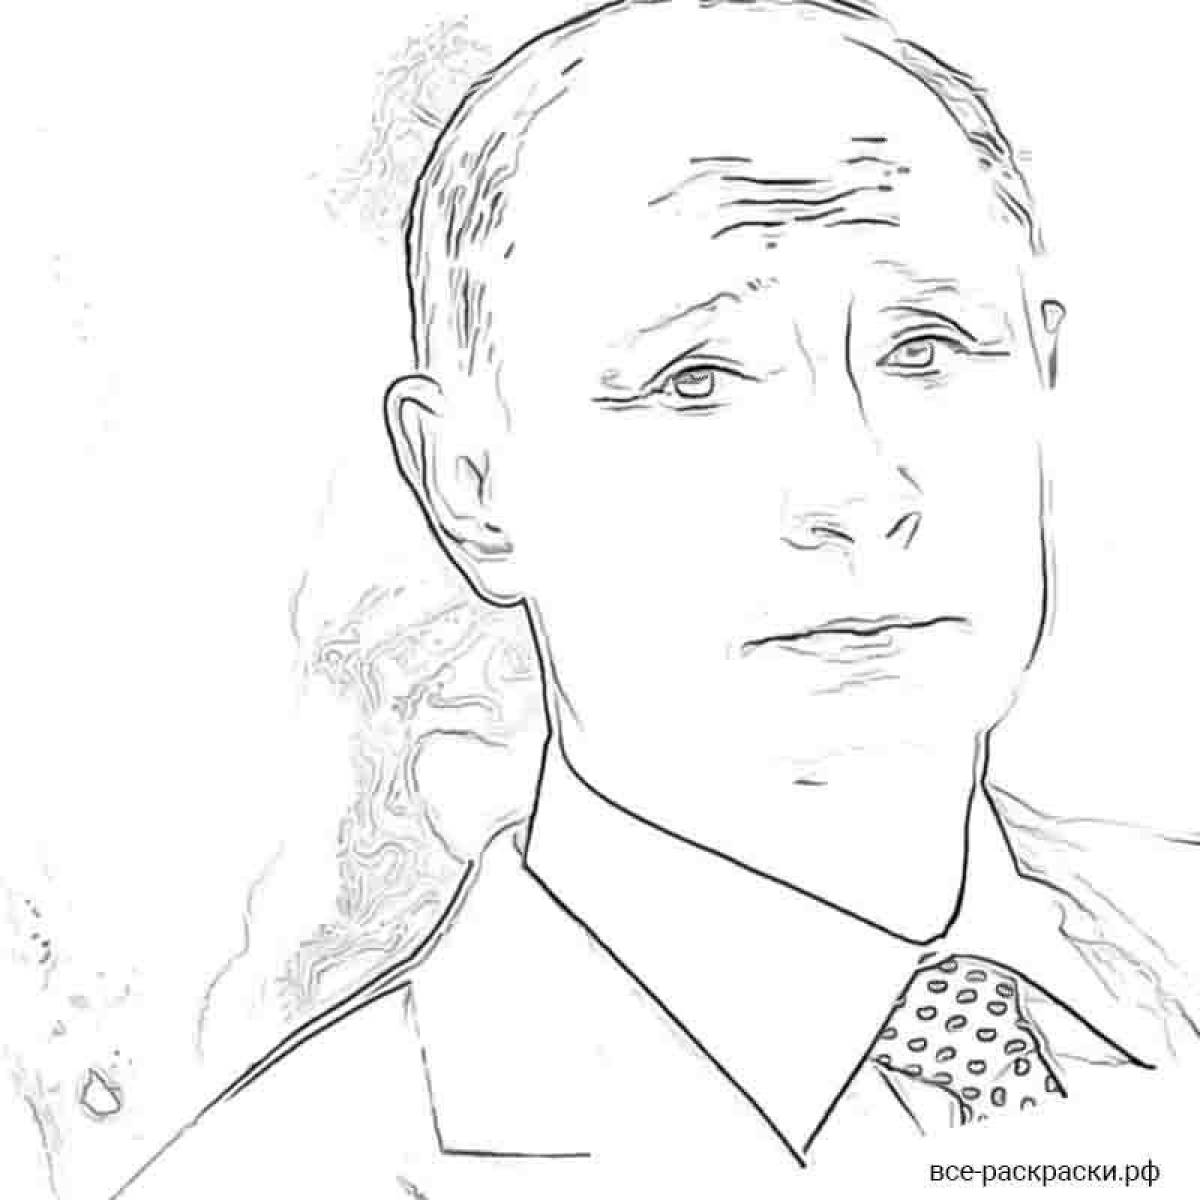 Putin's playful coloring page